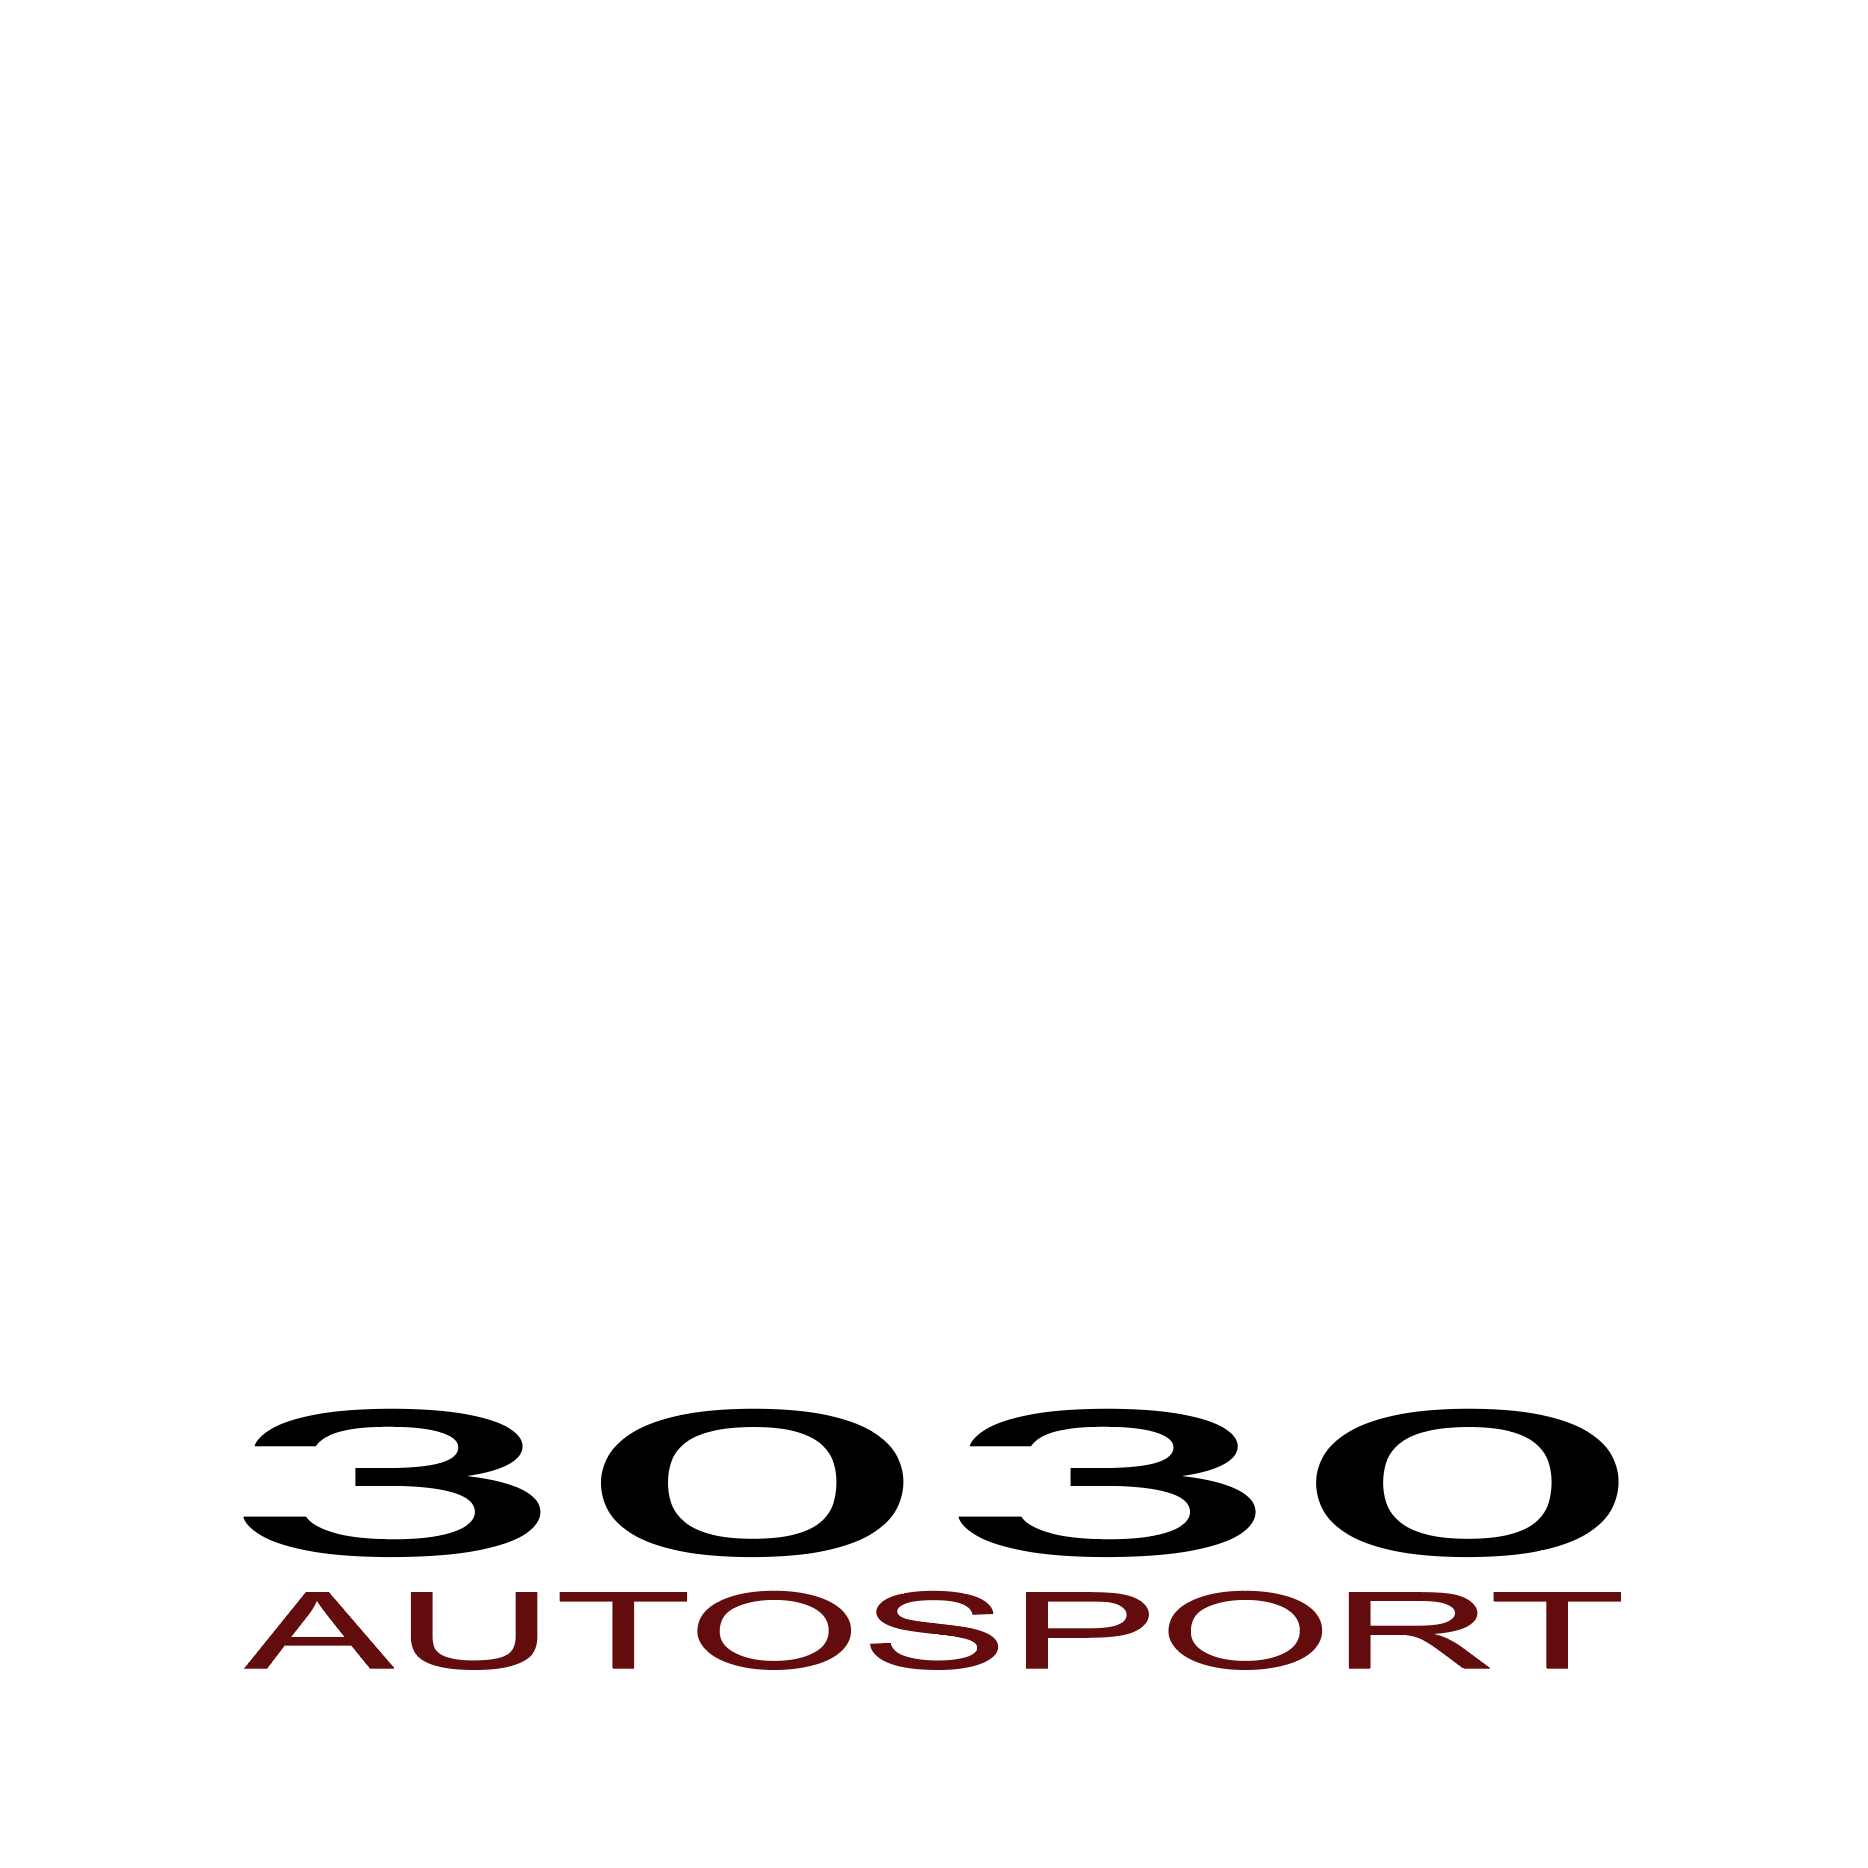 3030 Autosport